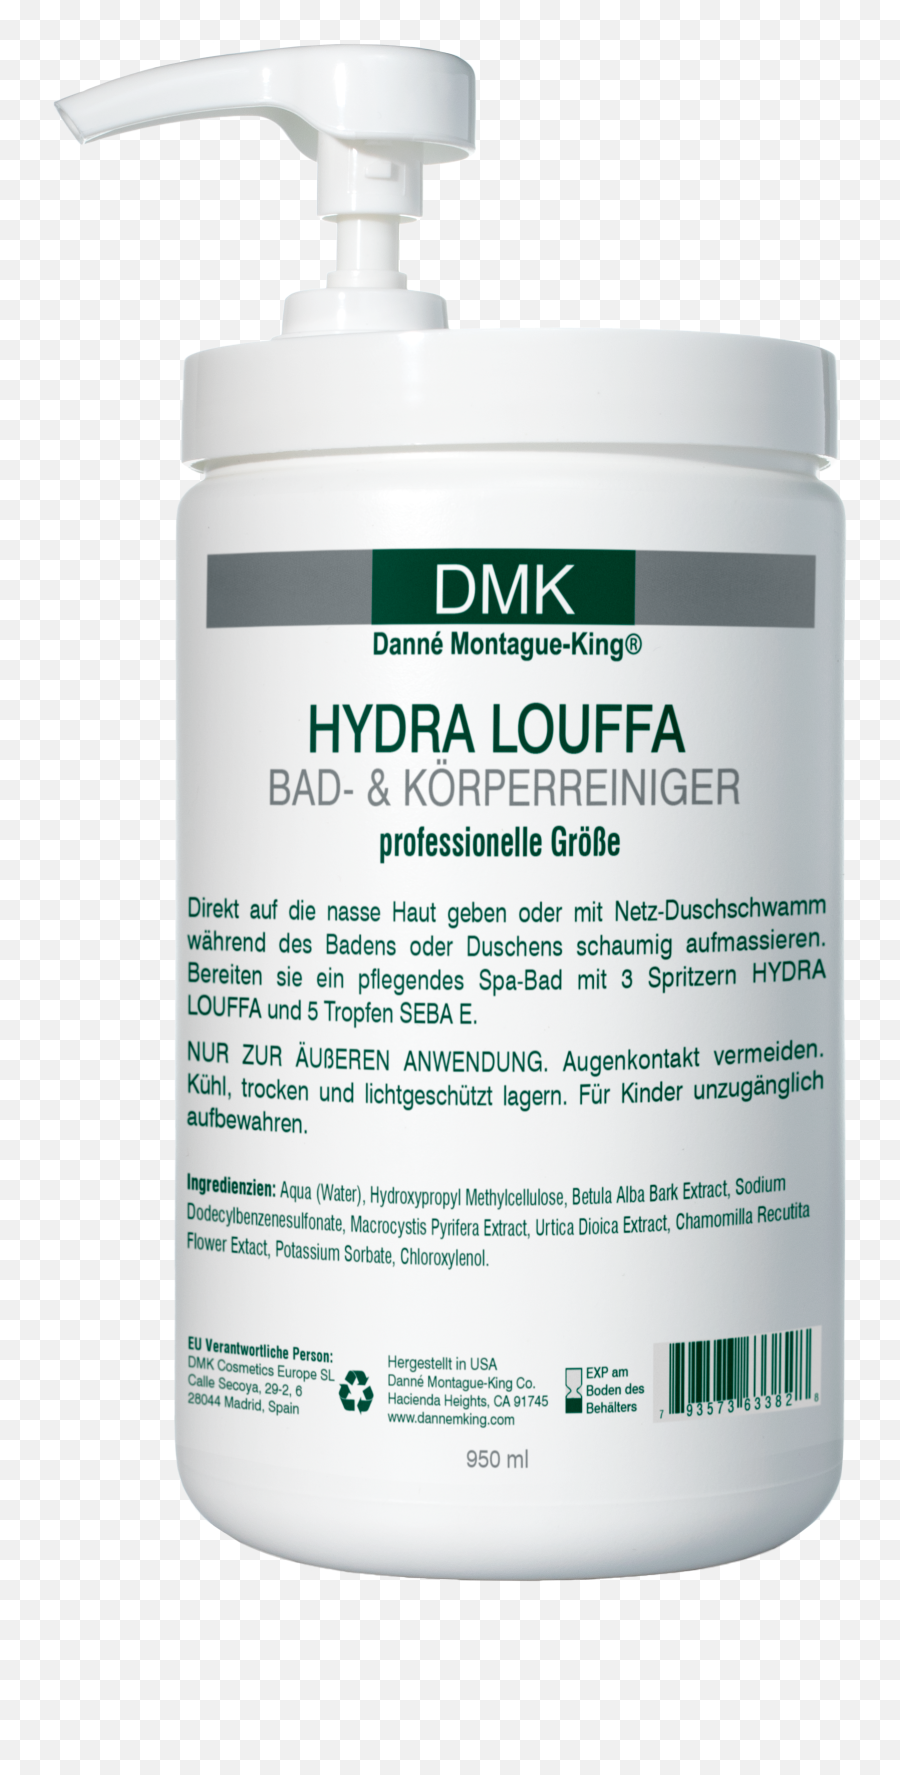 Hydra Louffa Jar Pump 950ml Ger Dmk S02 555 Crppng U2013 - Solution,Hydra Png